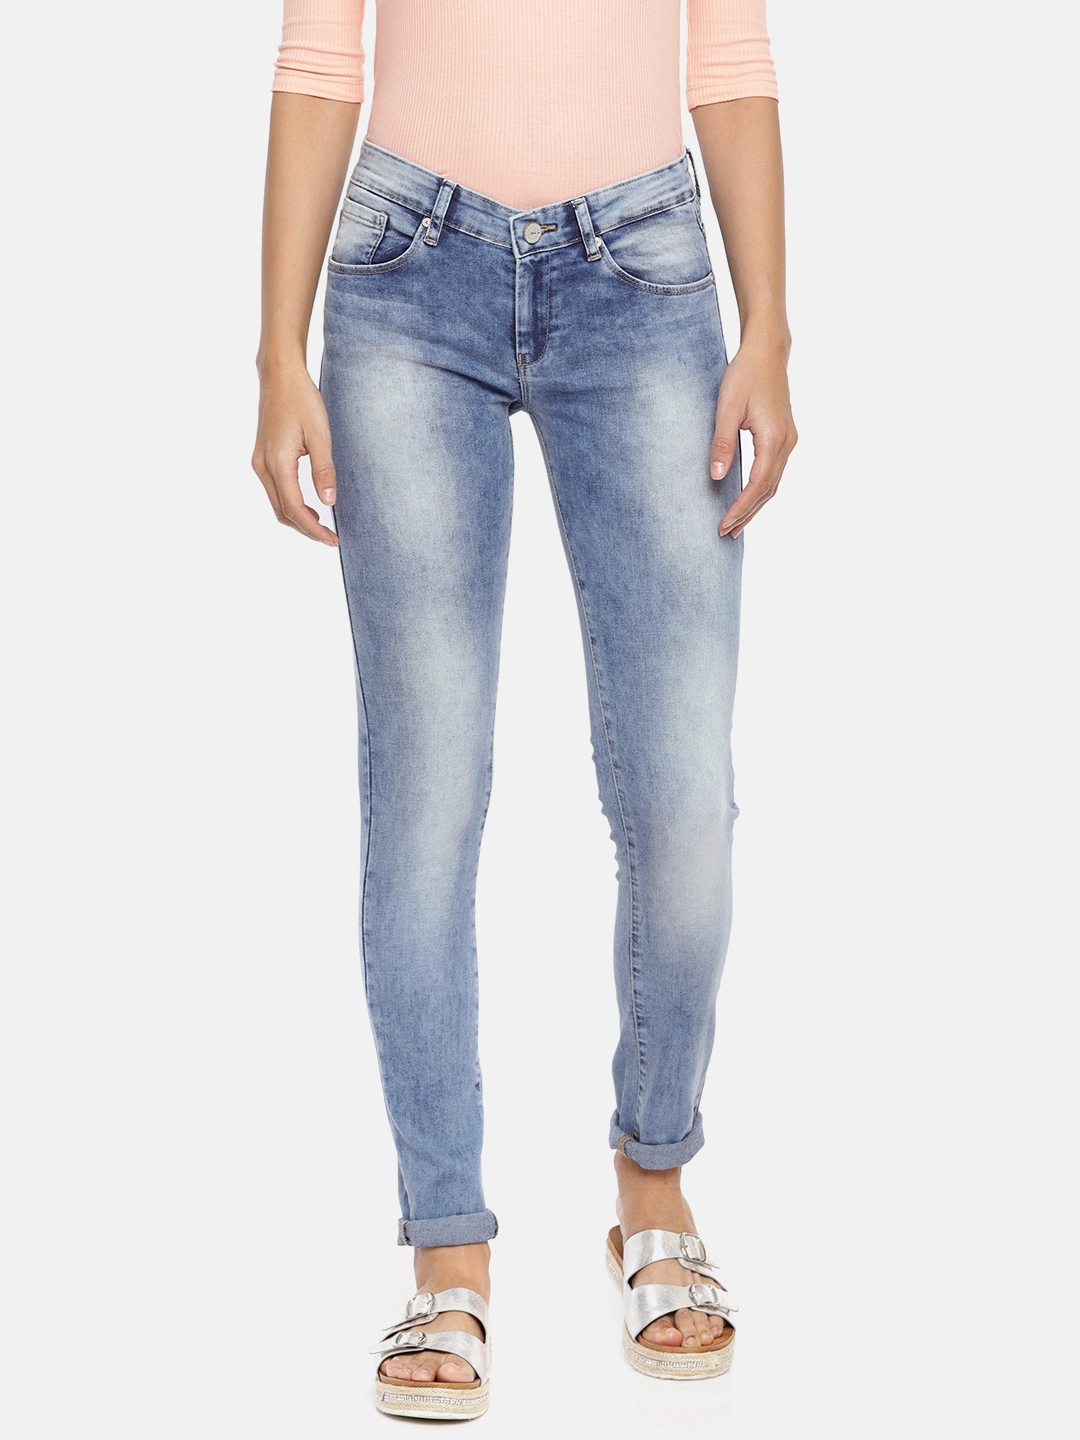 spykar jeans for womens